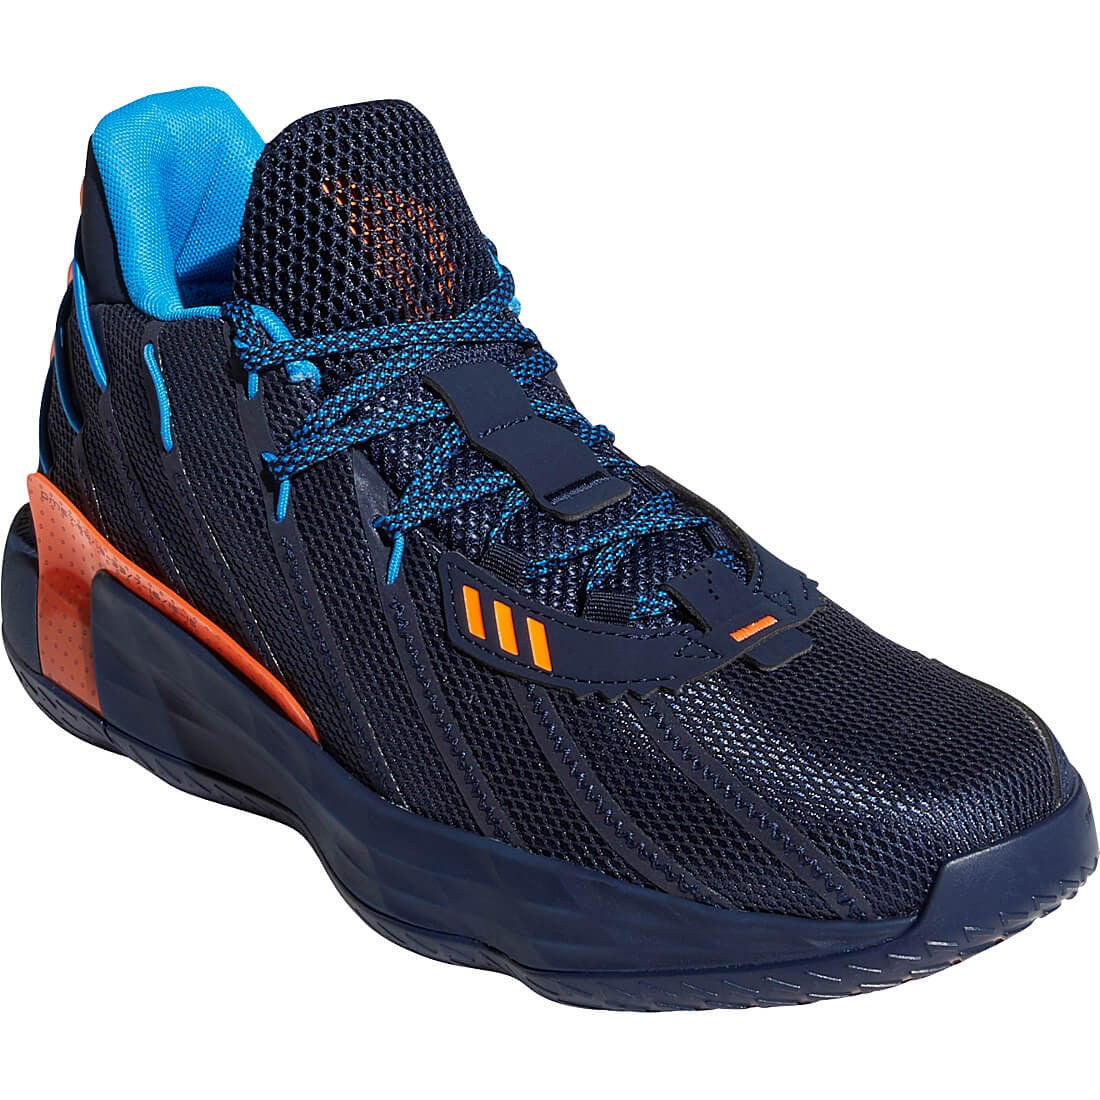 Adidas Dame 7 GCA navy/blue/orange